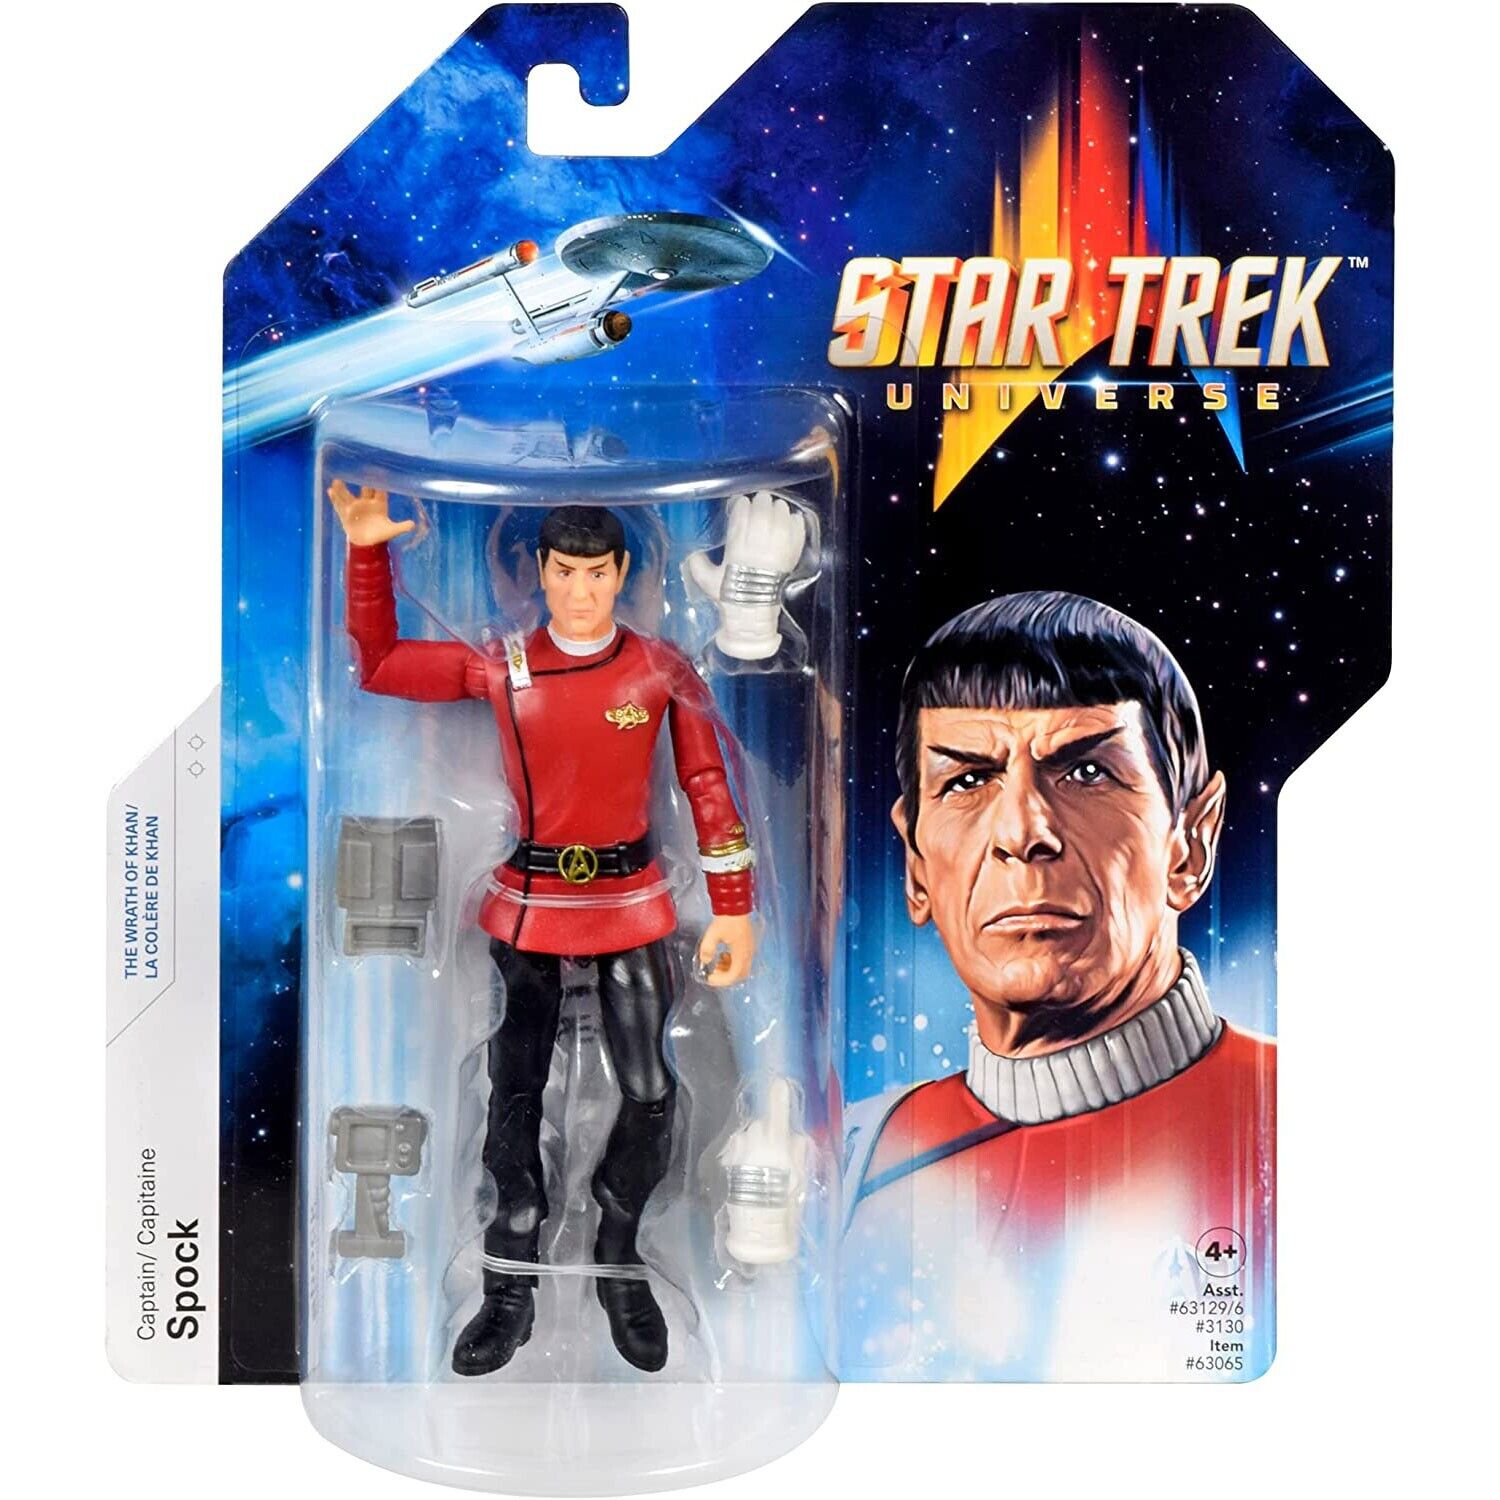 Star Trek Universe 5-Inch Captain Spock Figure (The Wrath of Khan)